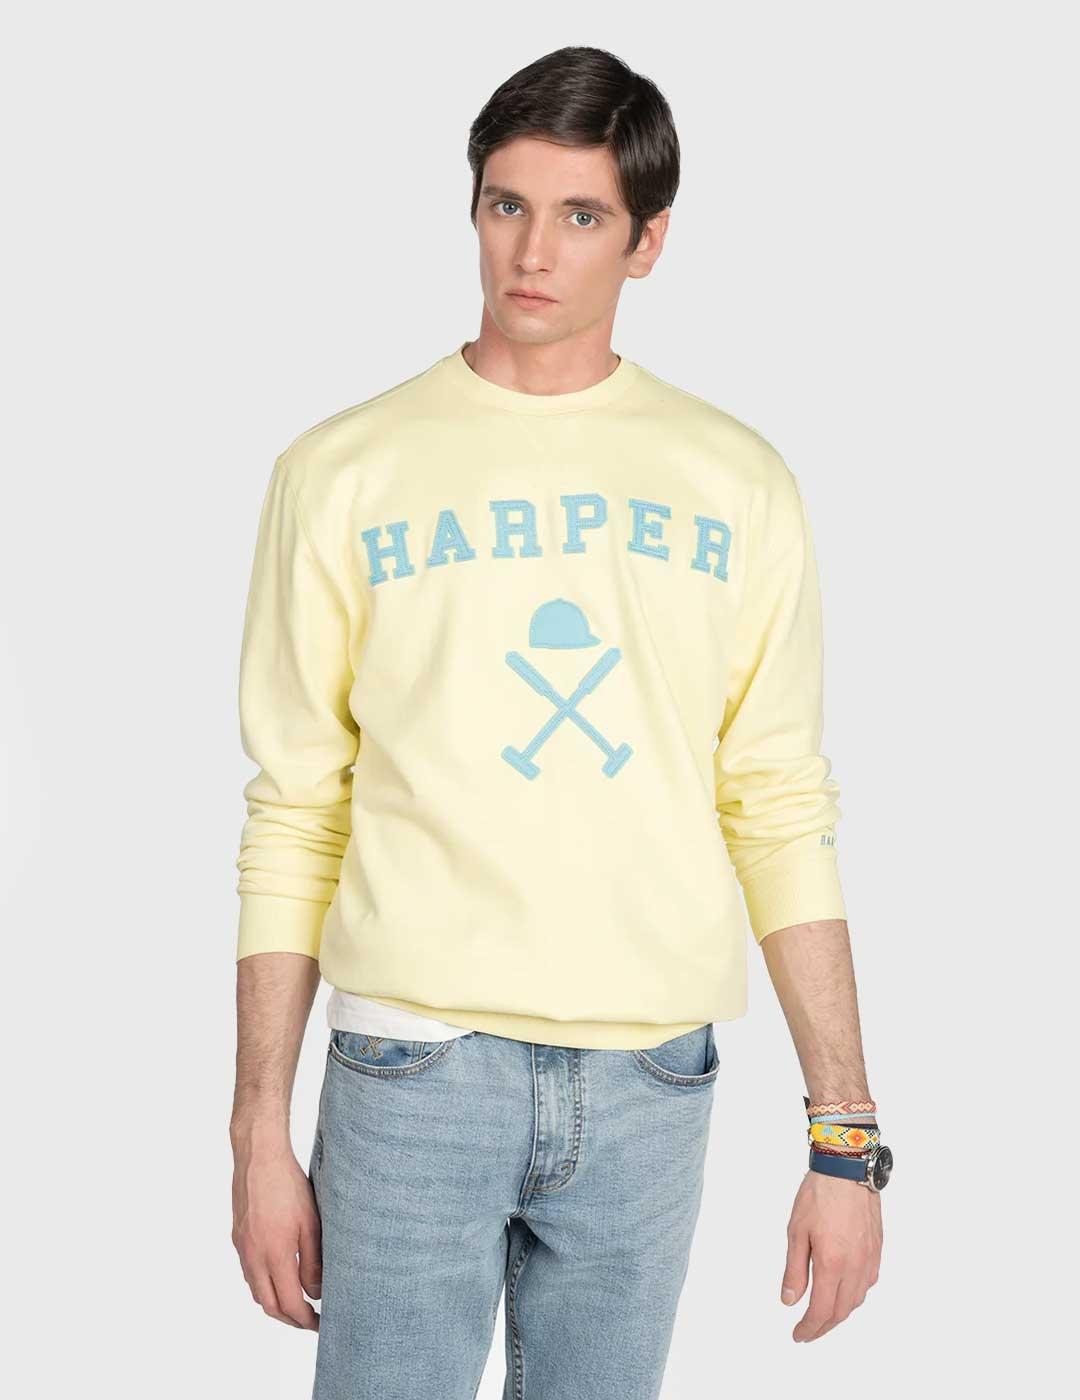 Harper & Neyer Sudadera New England amarilla para hombre